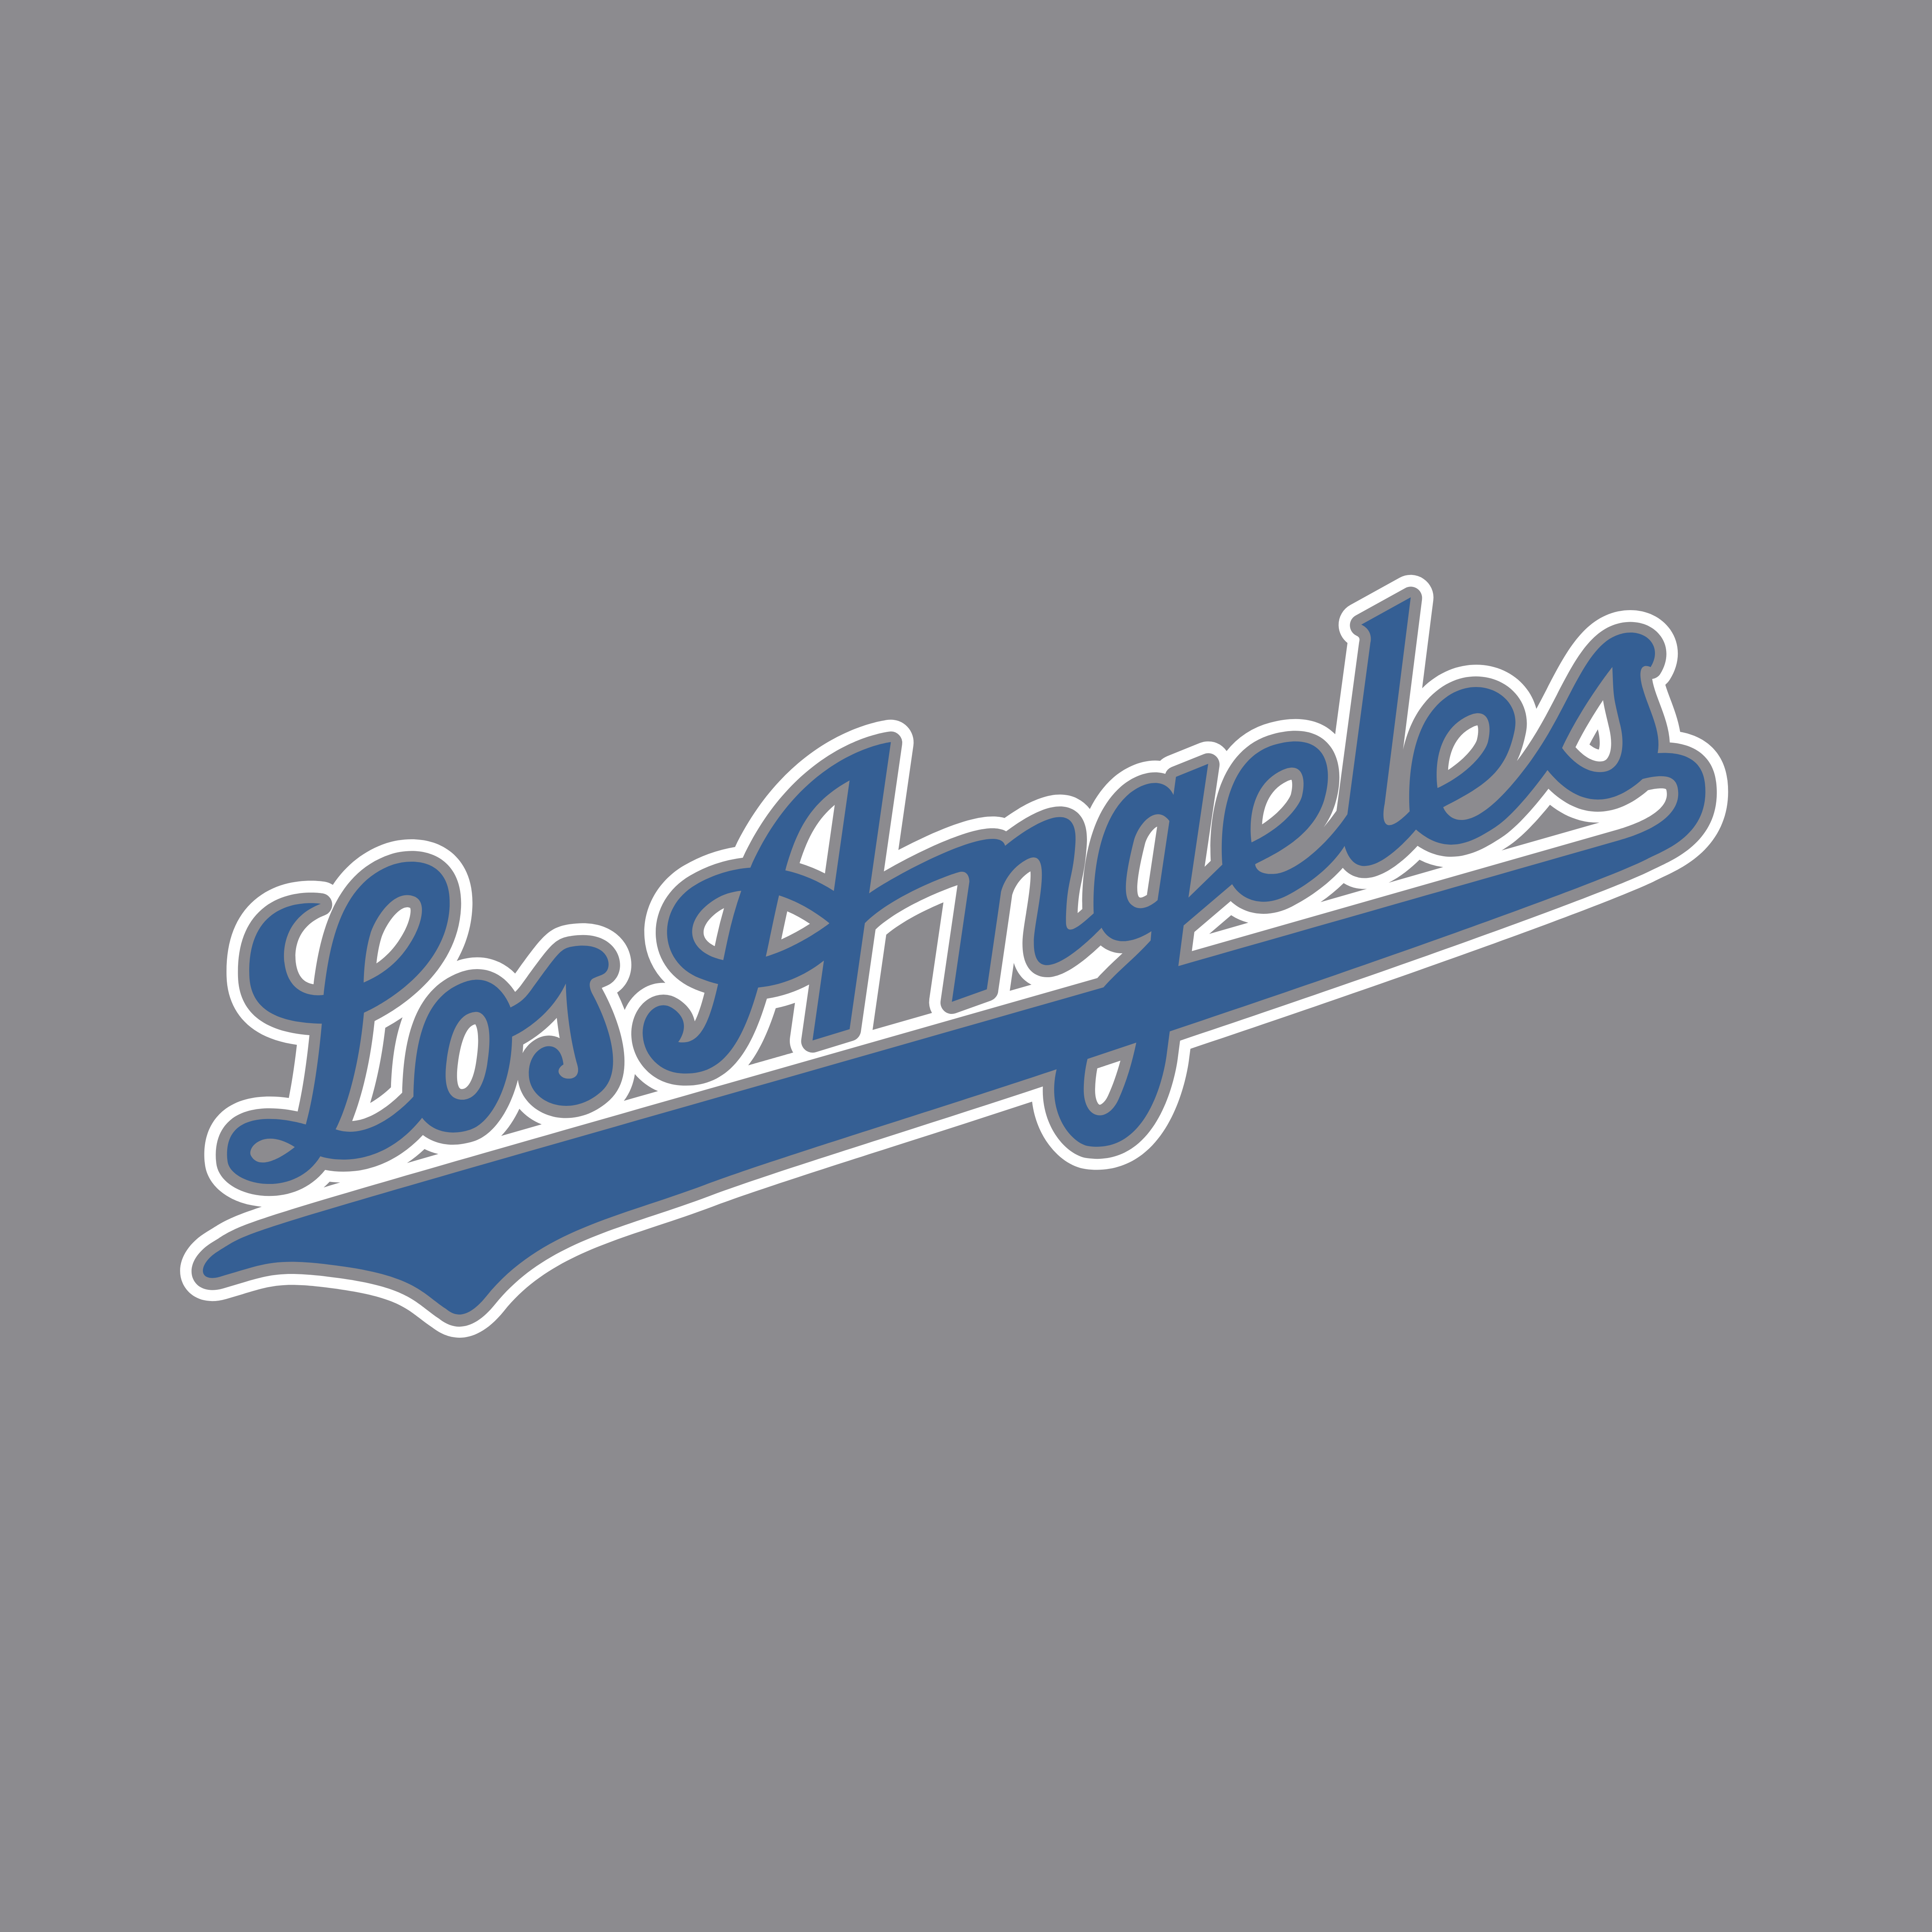 Los Angeles Dodgers Logo PNG - 179263